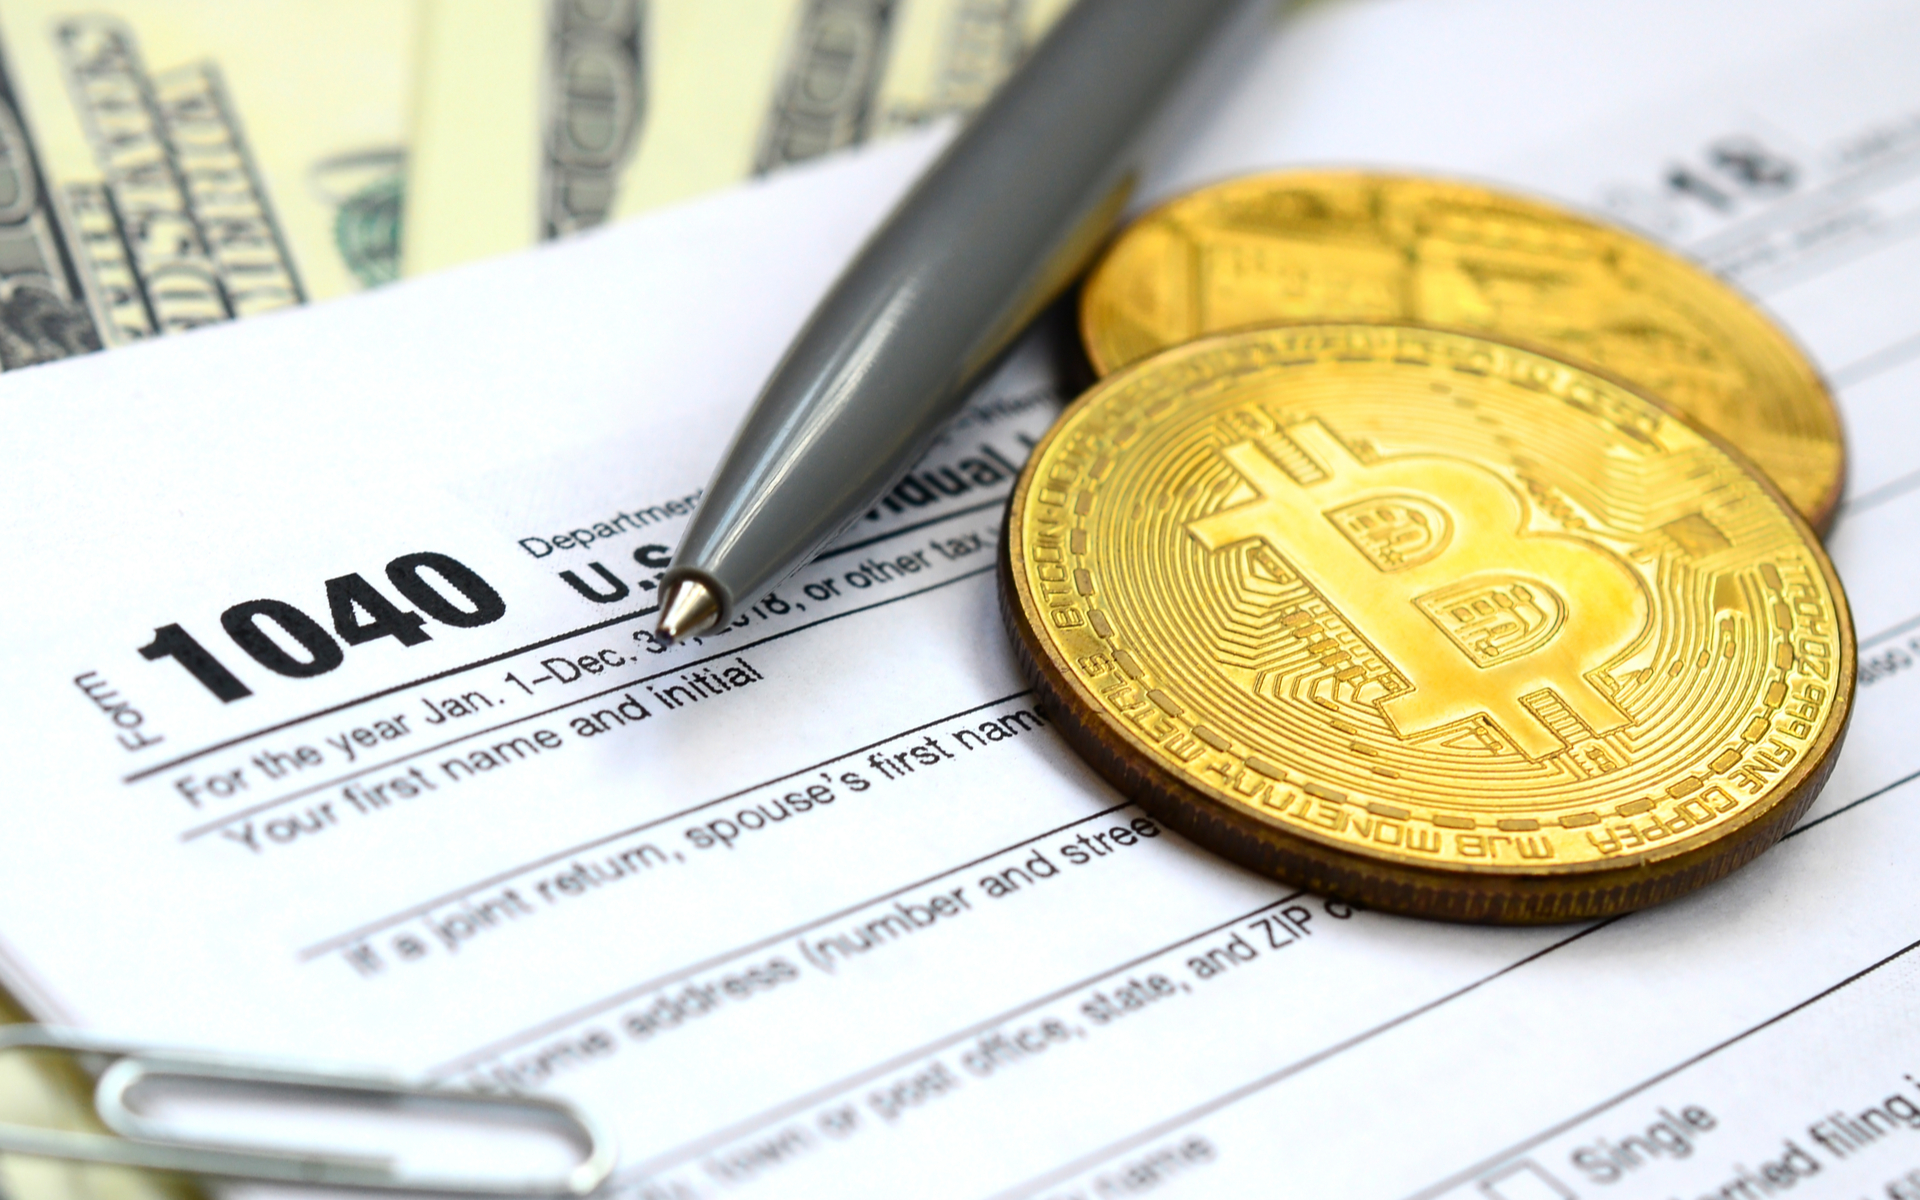 Are capital gains taxes paid on Bitcoin?